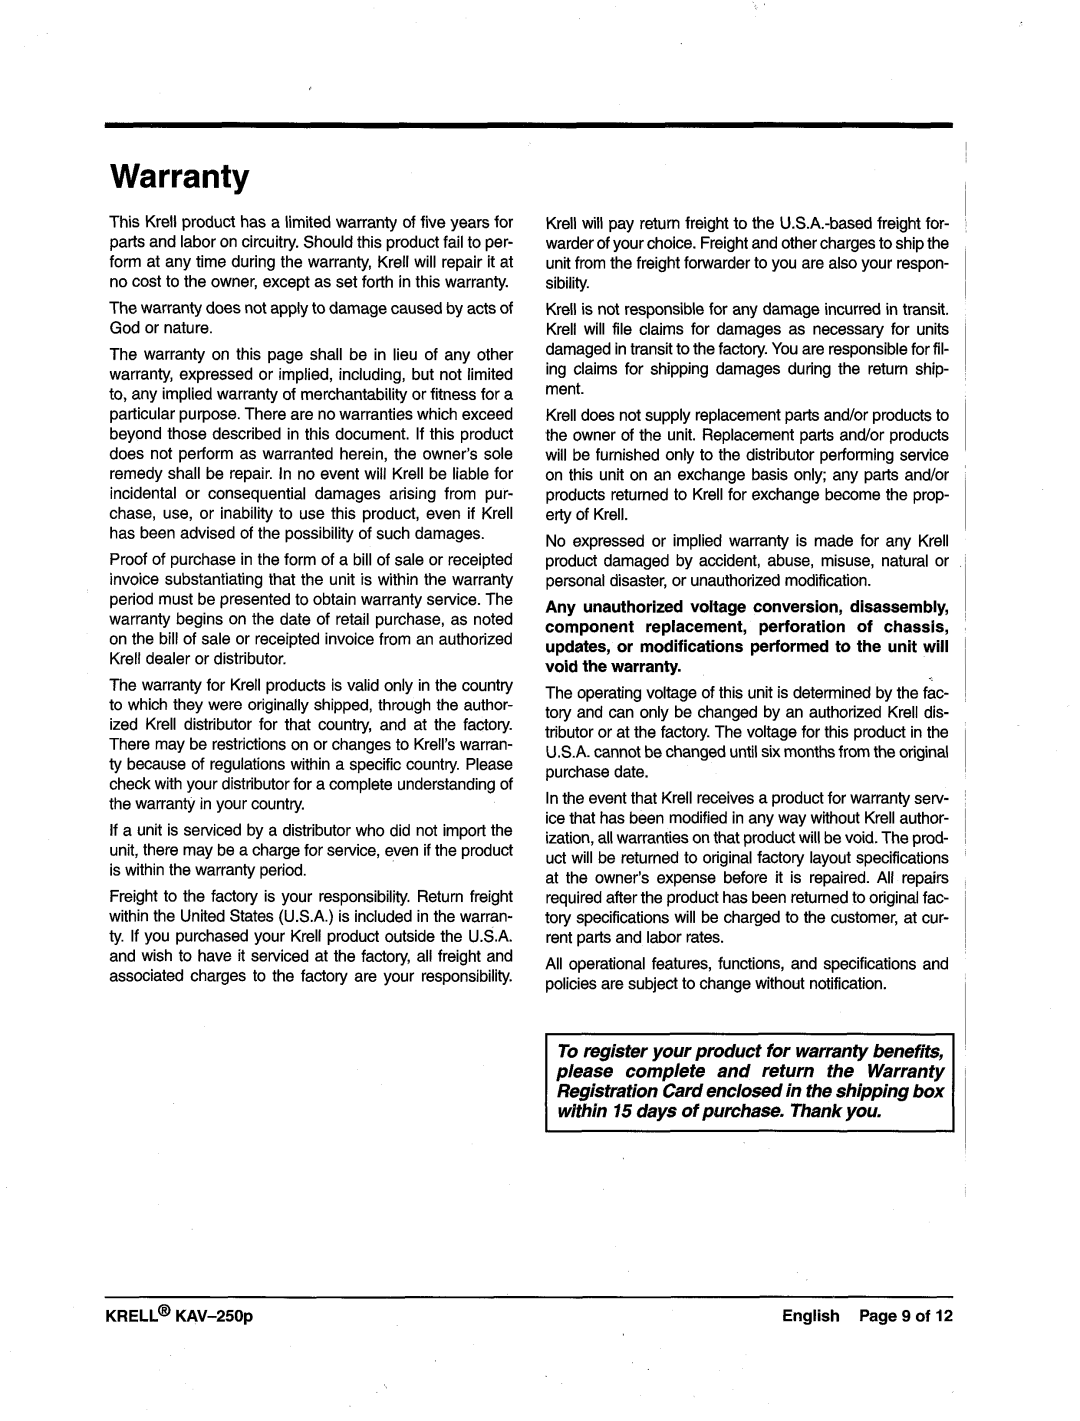 Krell Industries manual Warranty, KRELL KAV-250pEnglish Page9 of 